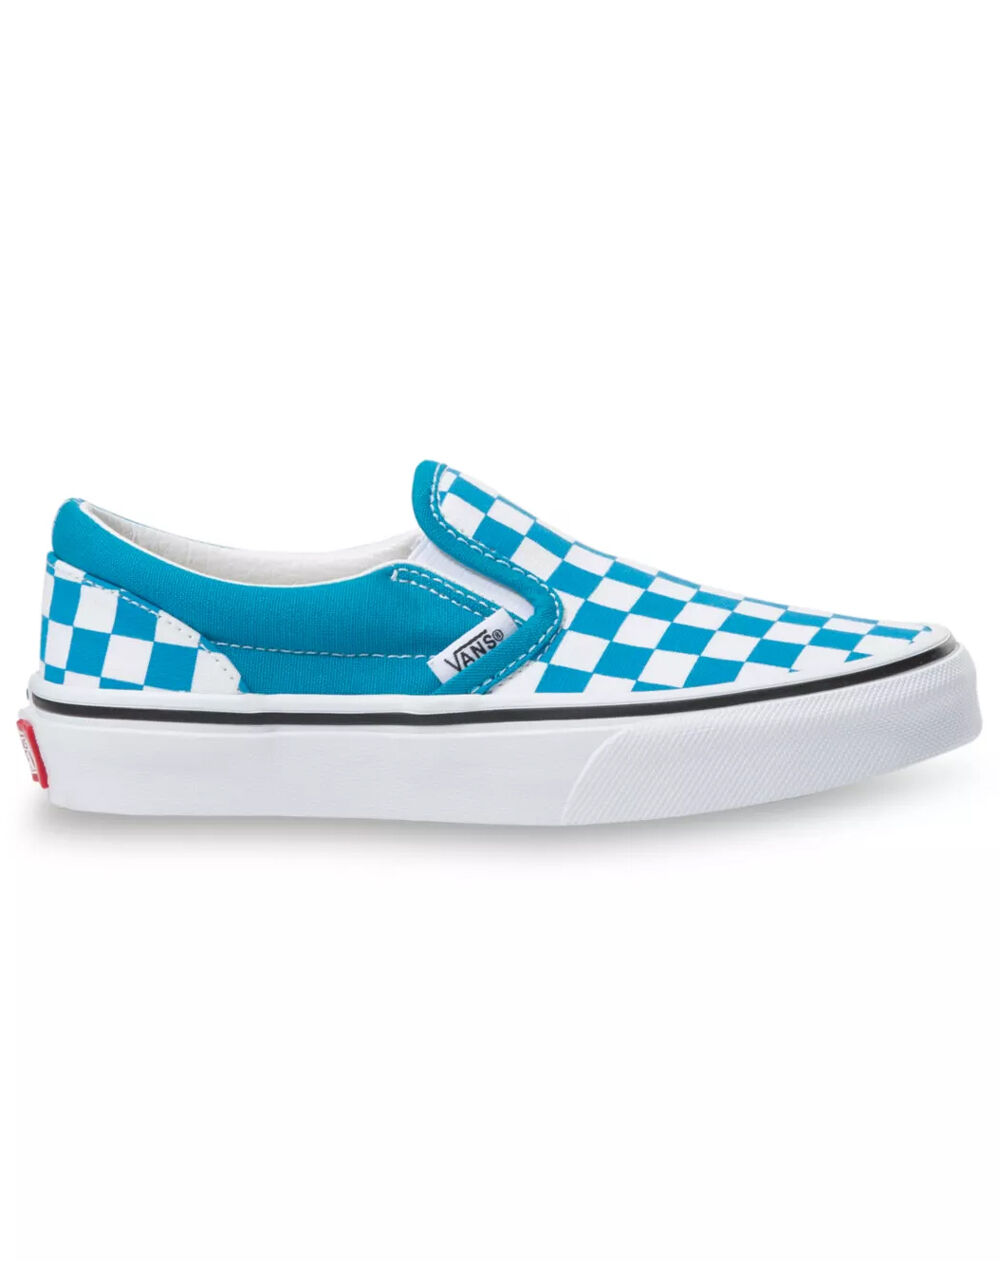 VANS Classic Checkerboard Slip-On Blue & White Kids Shoes - BLUE/WHITE ...